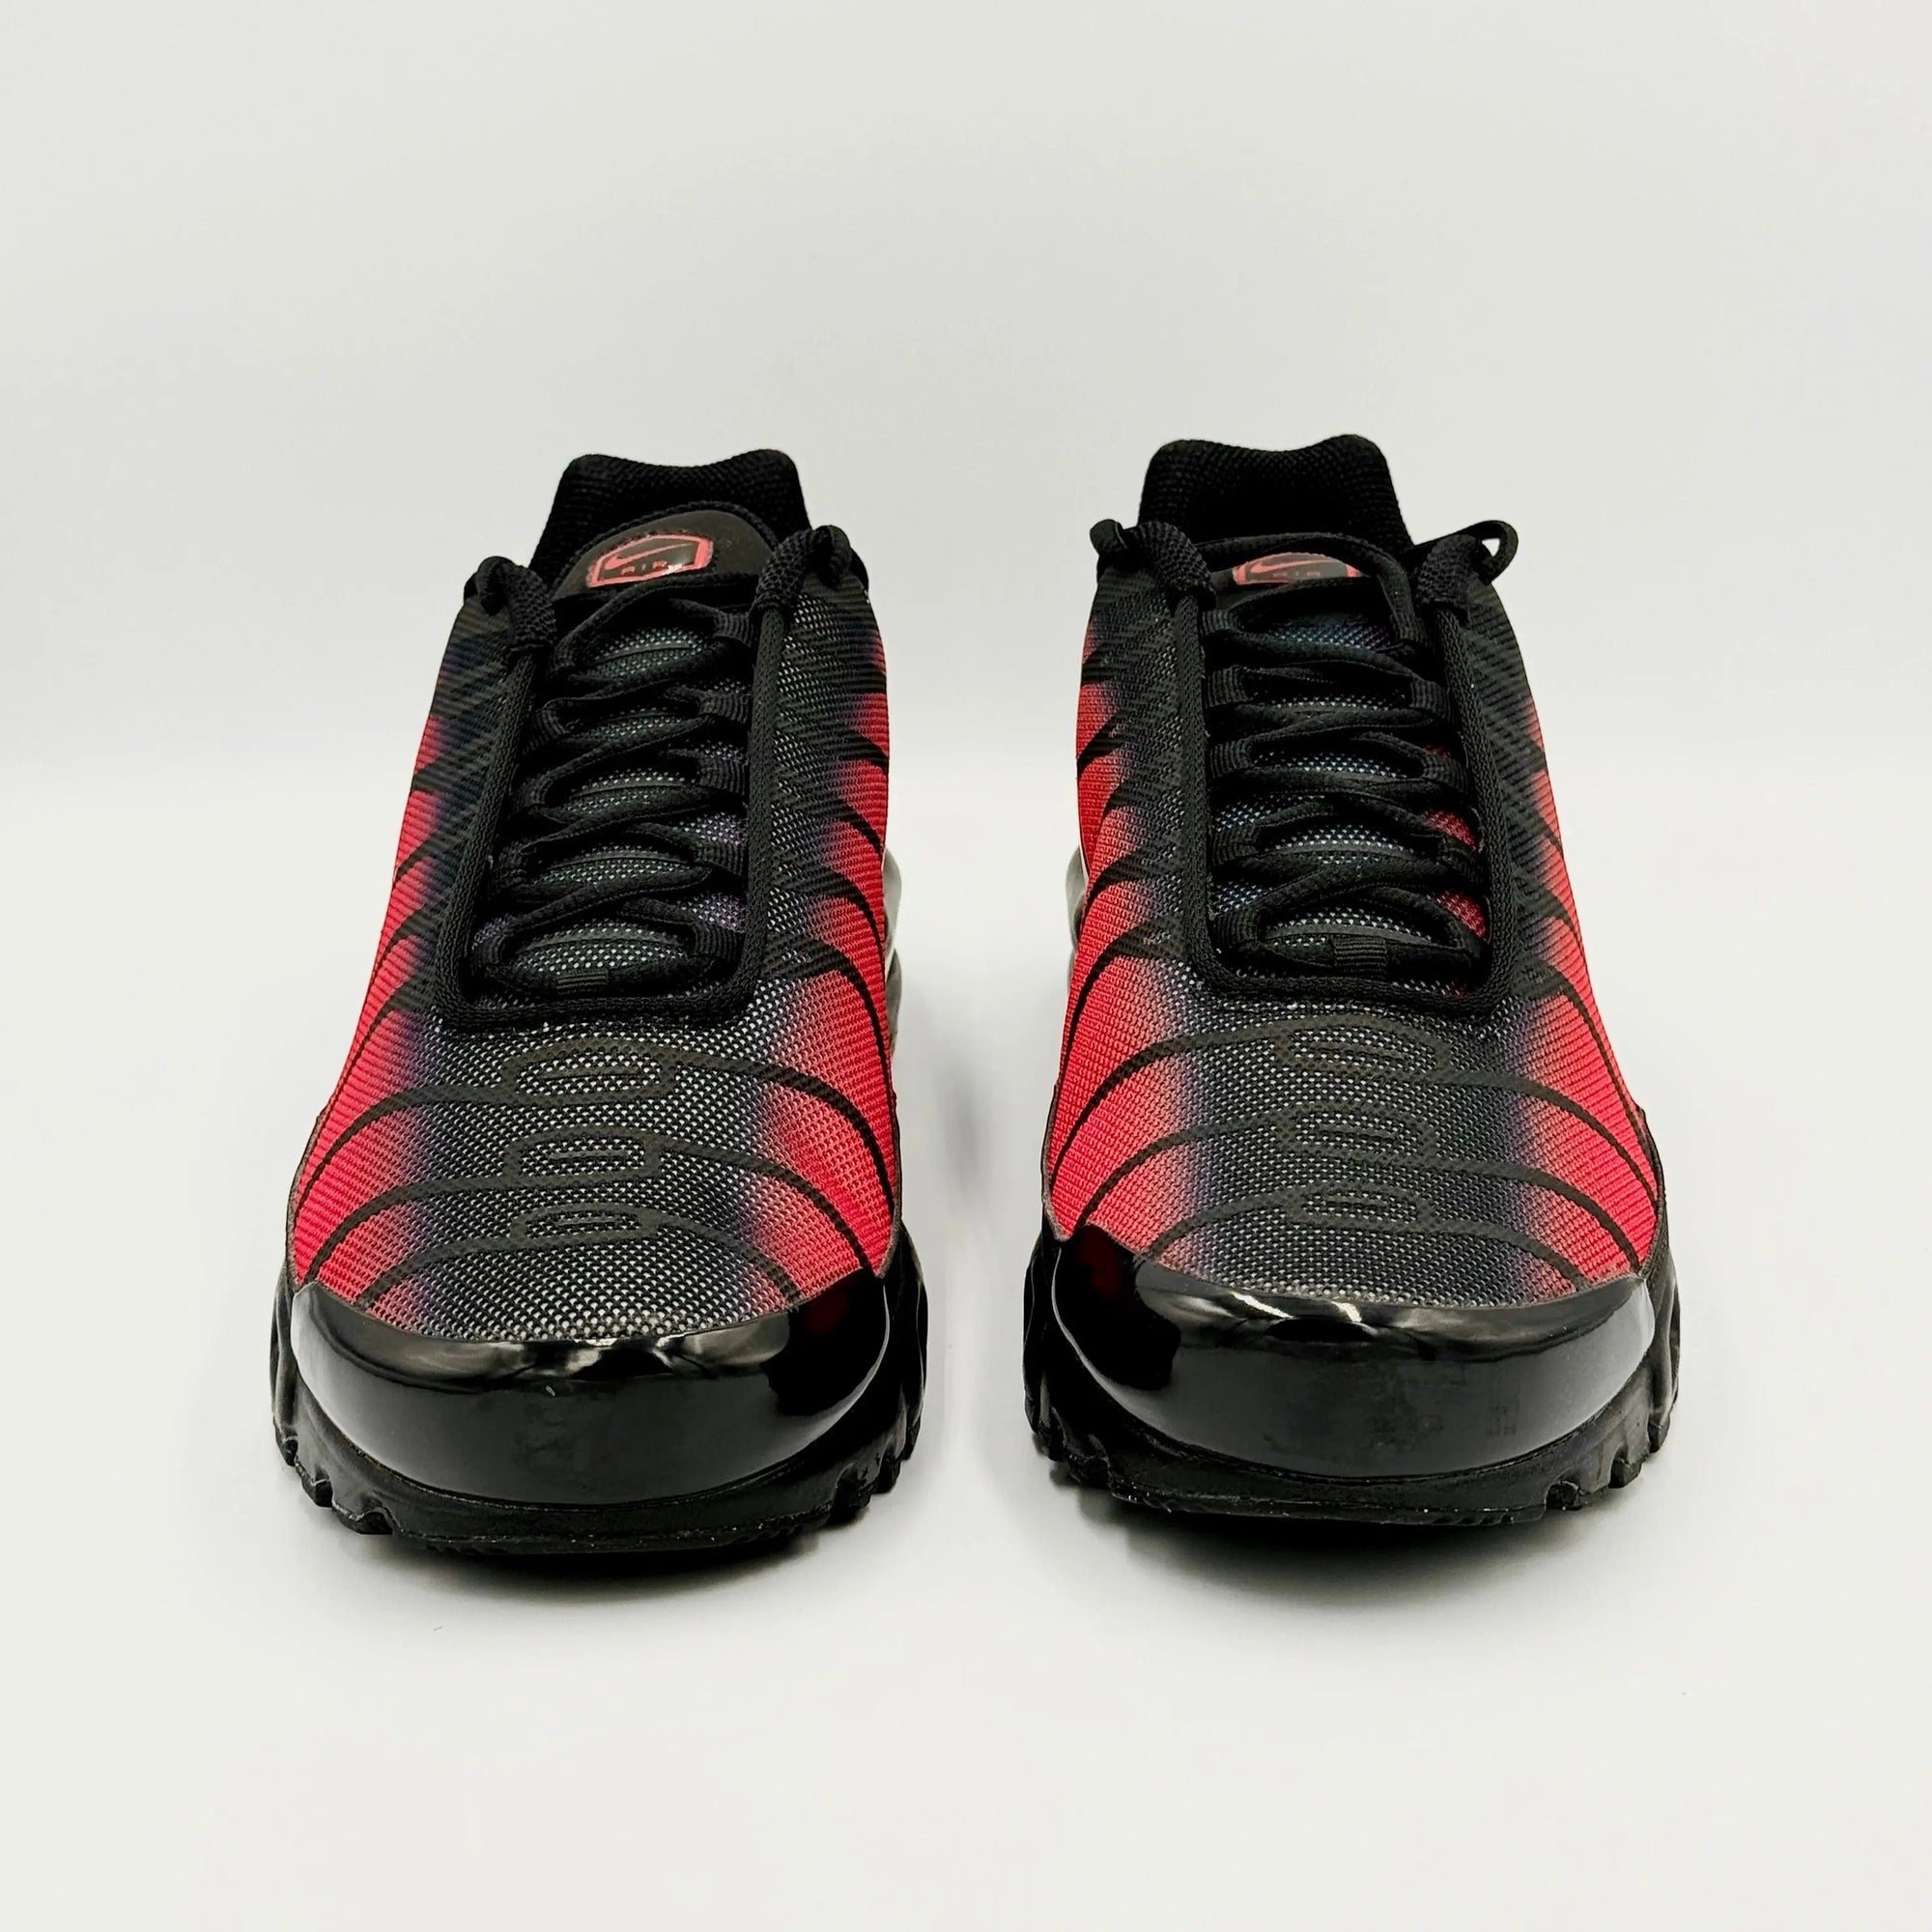 Nike TN Air Max Plus Bred Reflective  SA Sneakers